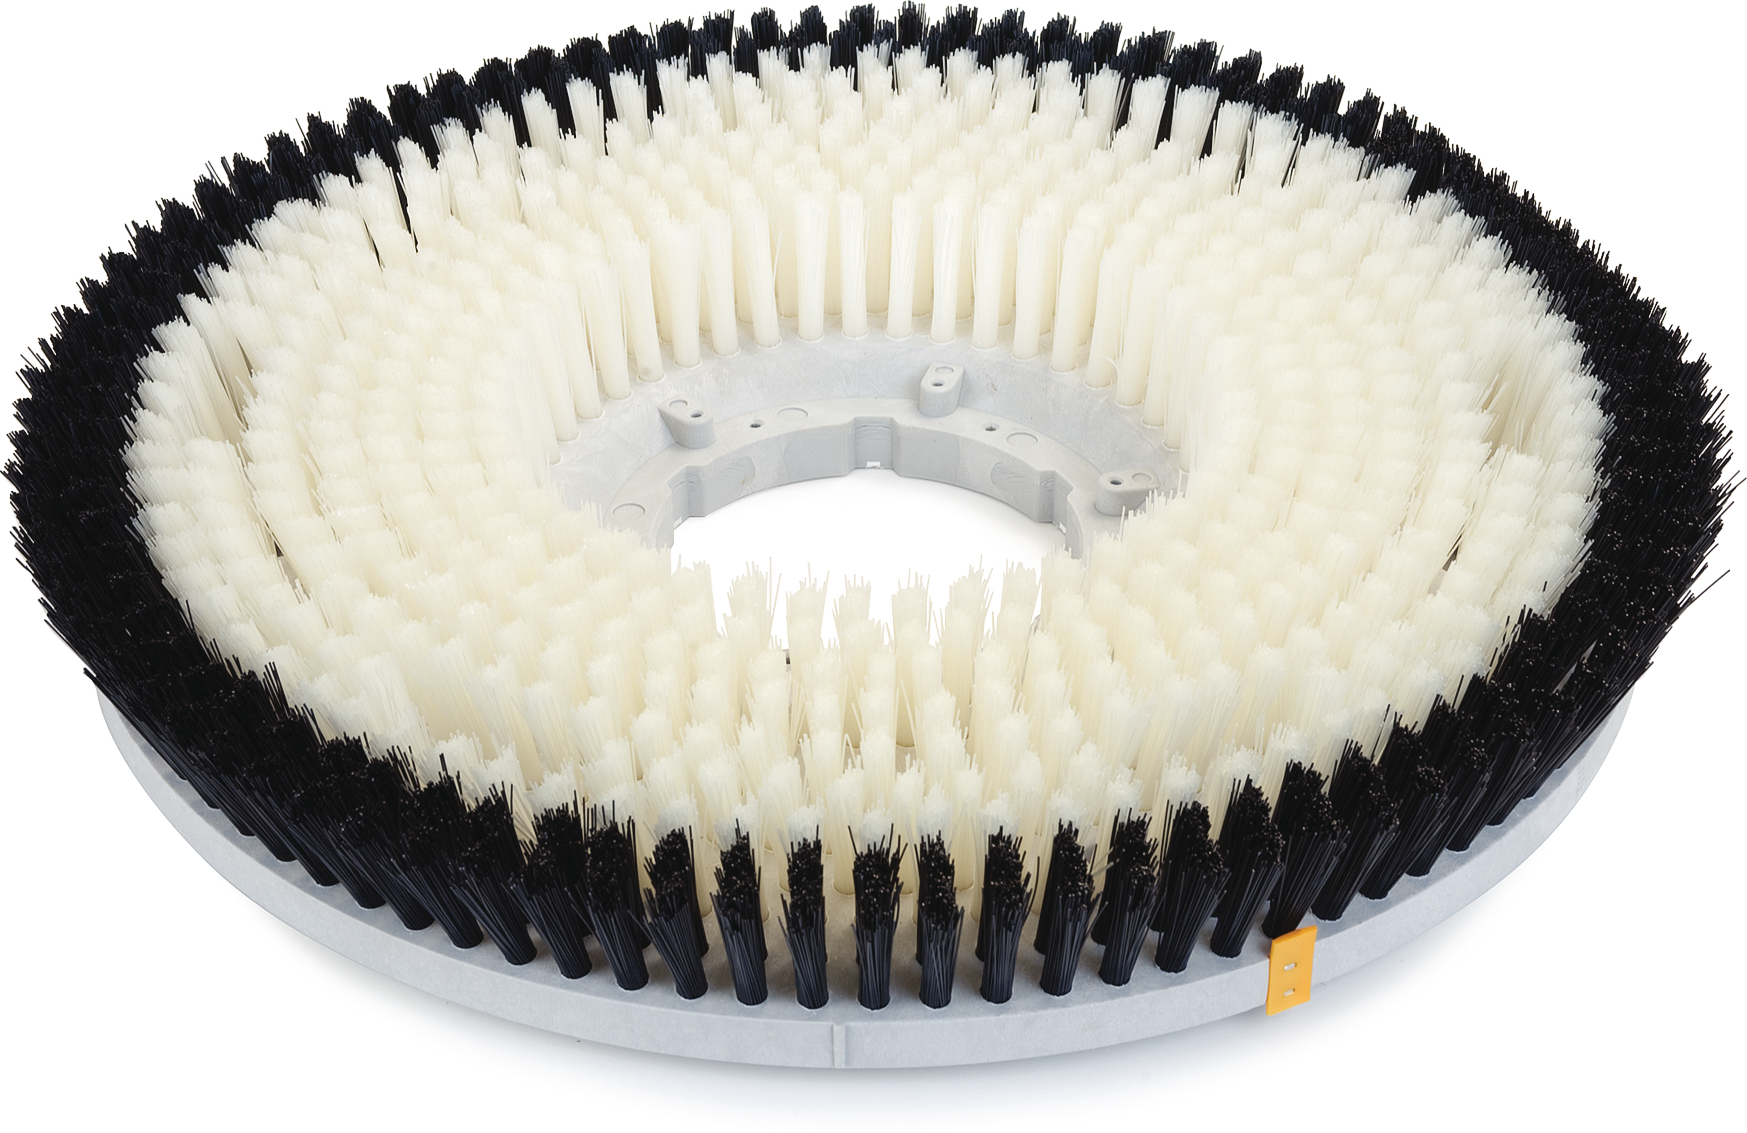 Colortech White-Black Karpet Kare Nylon Brush 16 - White-Black